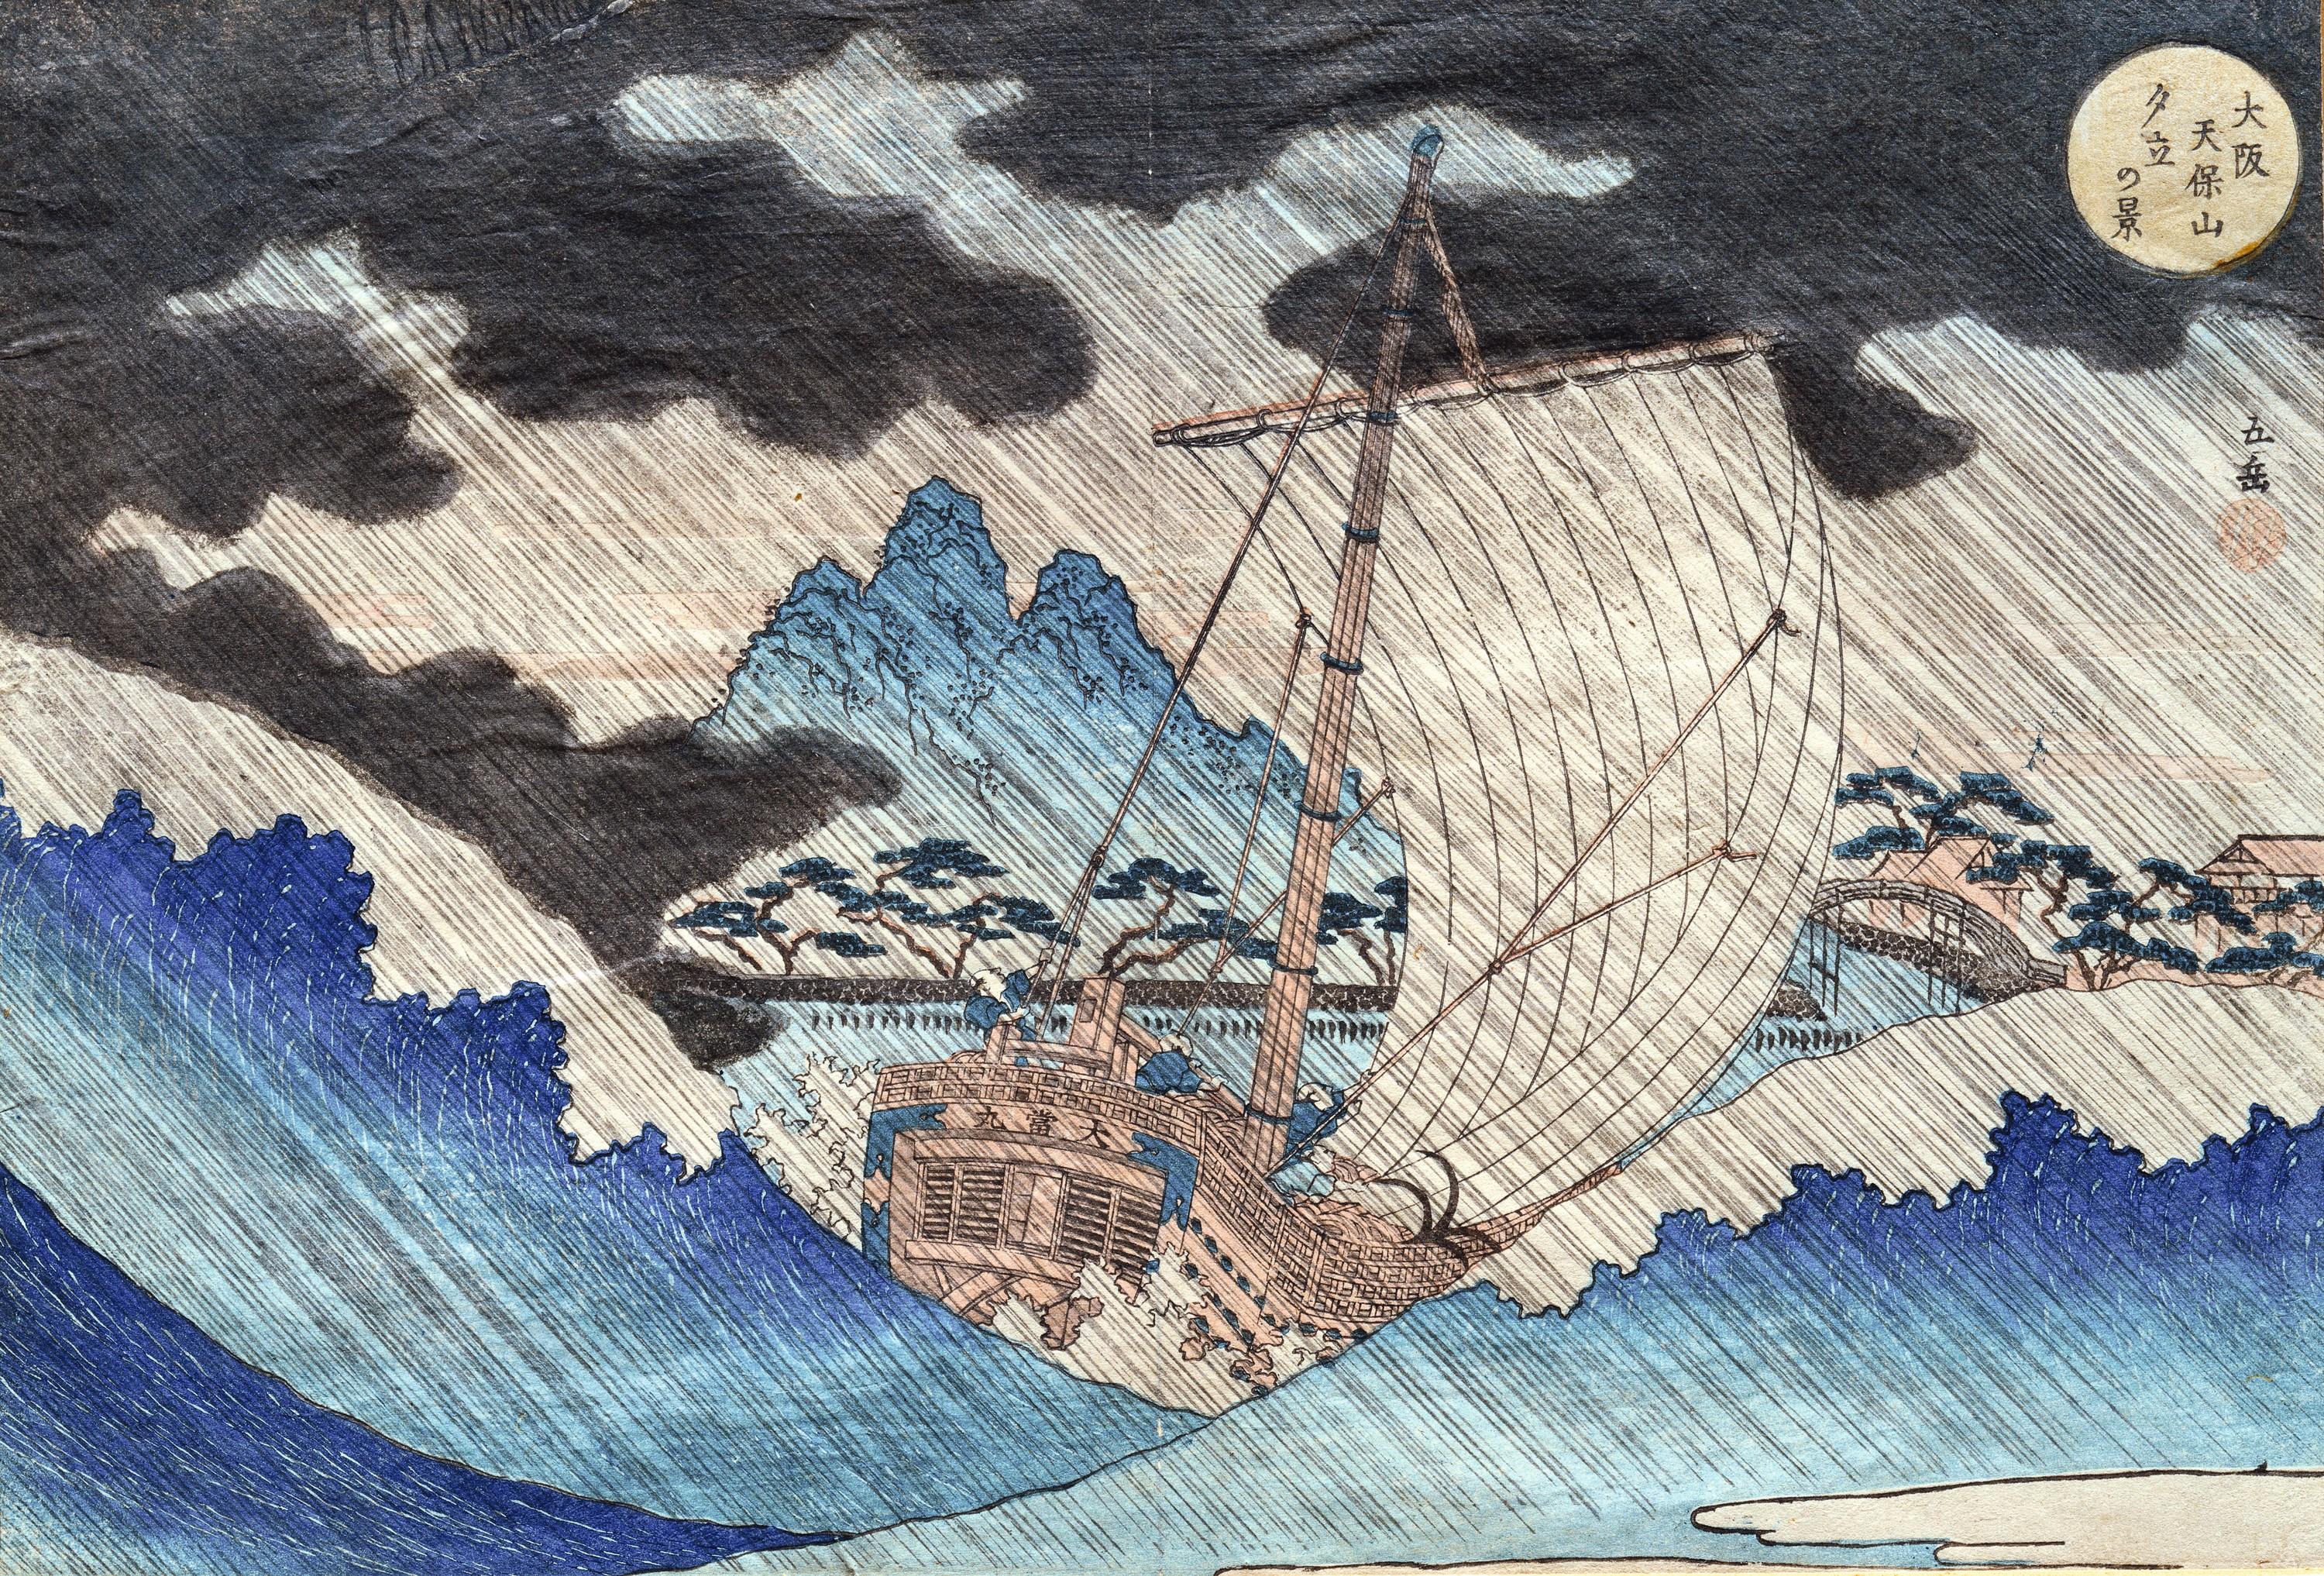 Yashima Gakutei, Bateau dans la tempête, port de Tempozan, vers 1834.